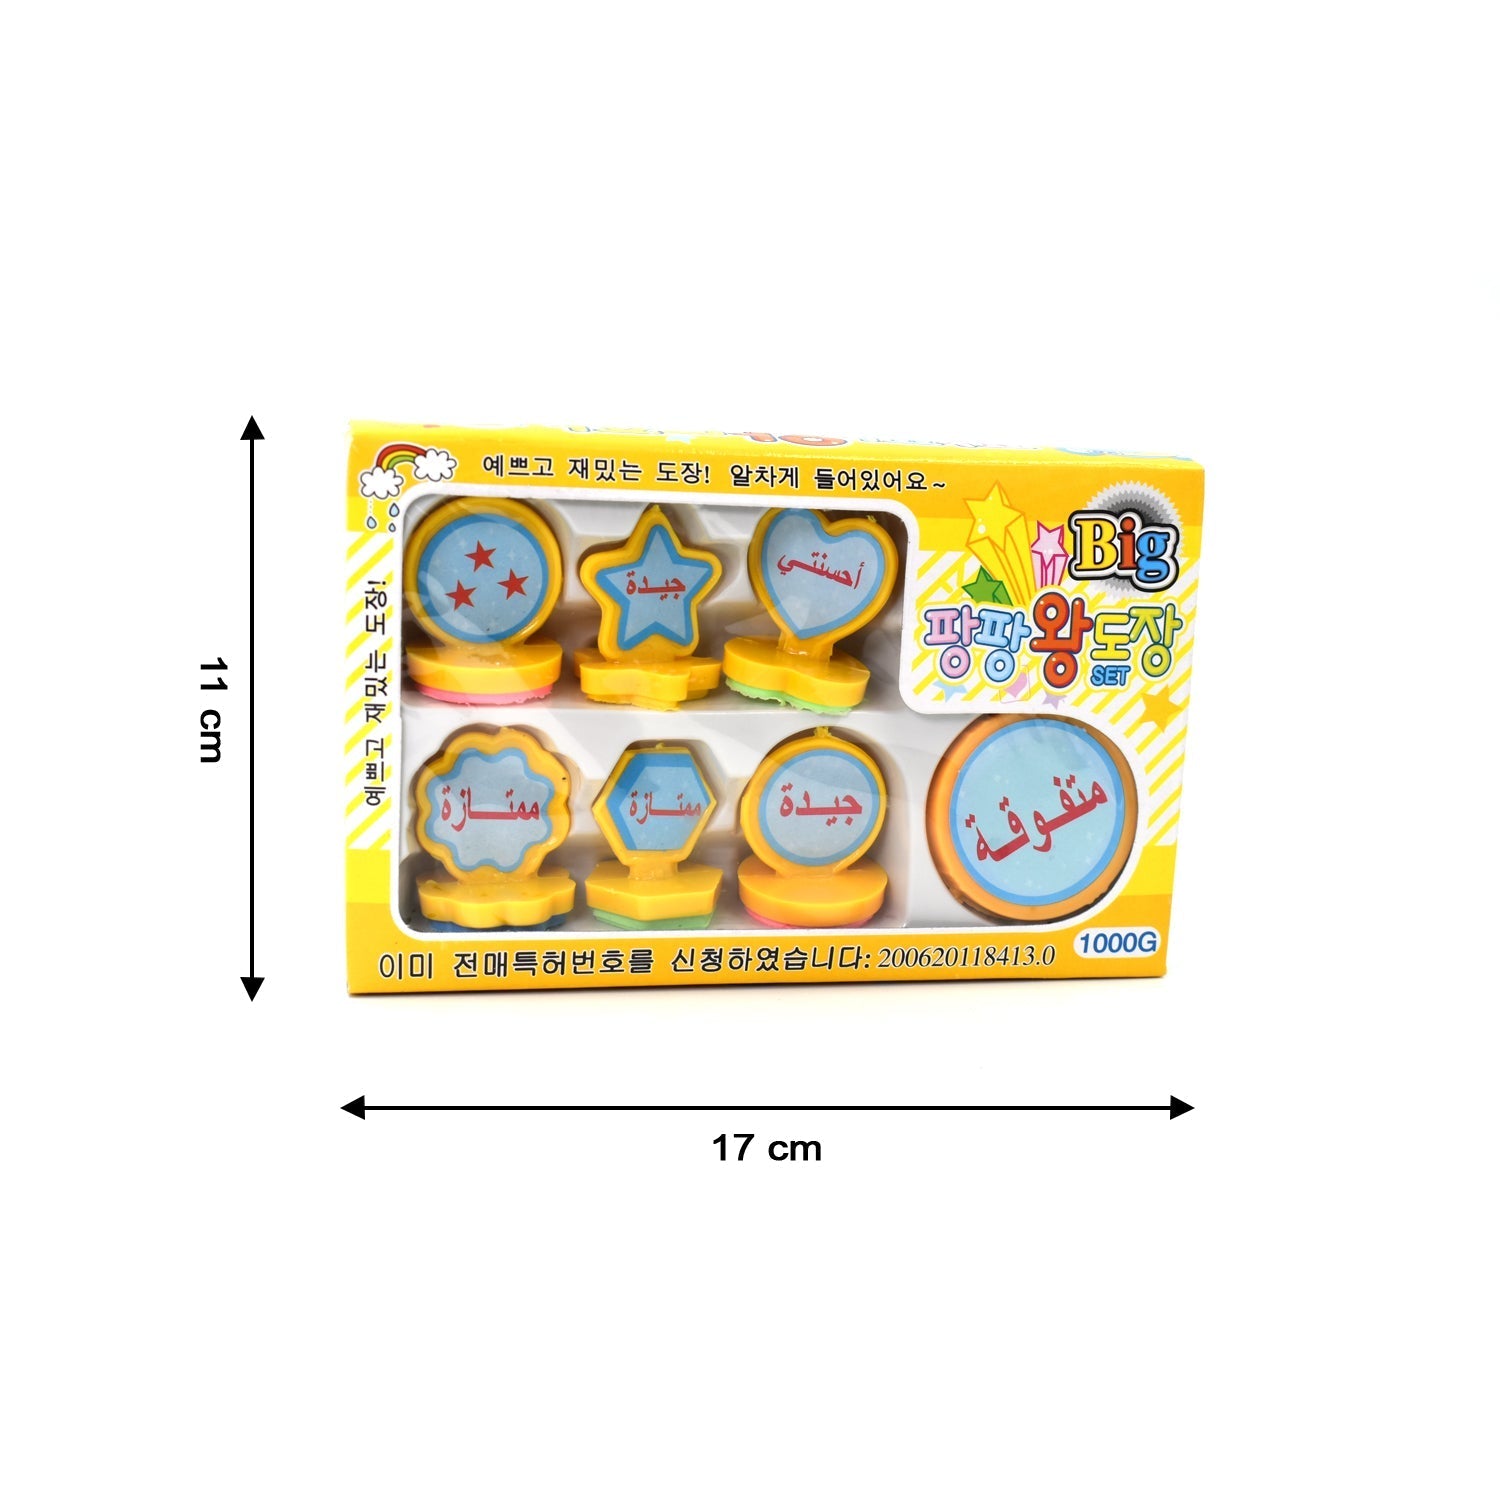 4802 Unique Different Shape Stamps 7 pieces for Kids Motivation and Reward Theme Prefect Gift for Teachers, Parents and Students (Multicolor) 